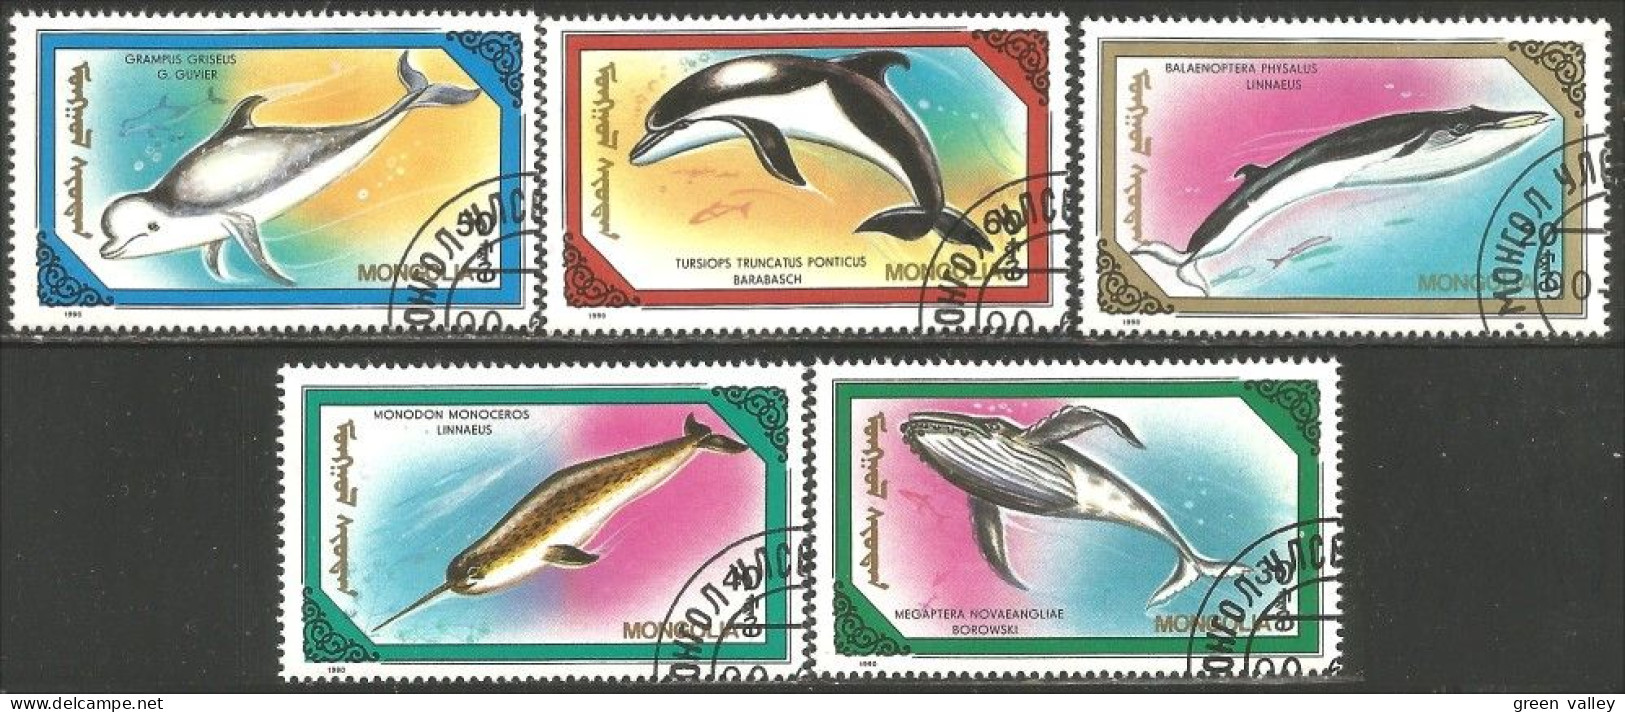 620 Mongolie Baleines Whales Cachalots Balena Capodoglio Ballena Wal Pottwal Dauphins Dolphins Delphin (MNG-76) - Baleines